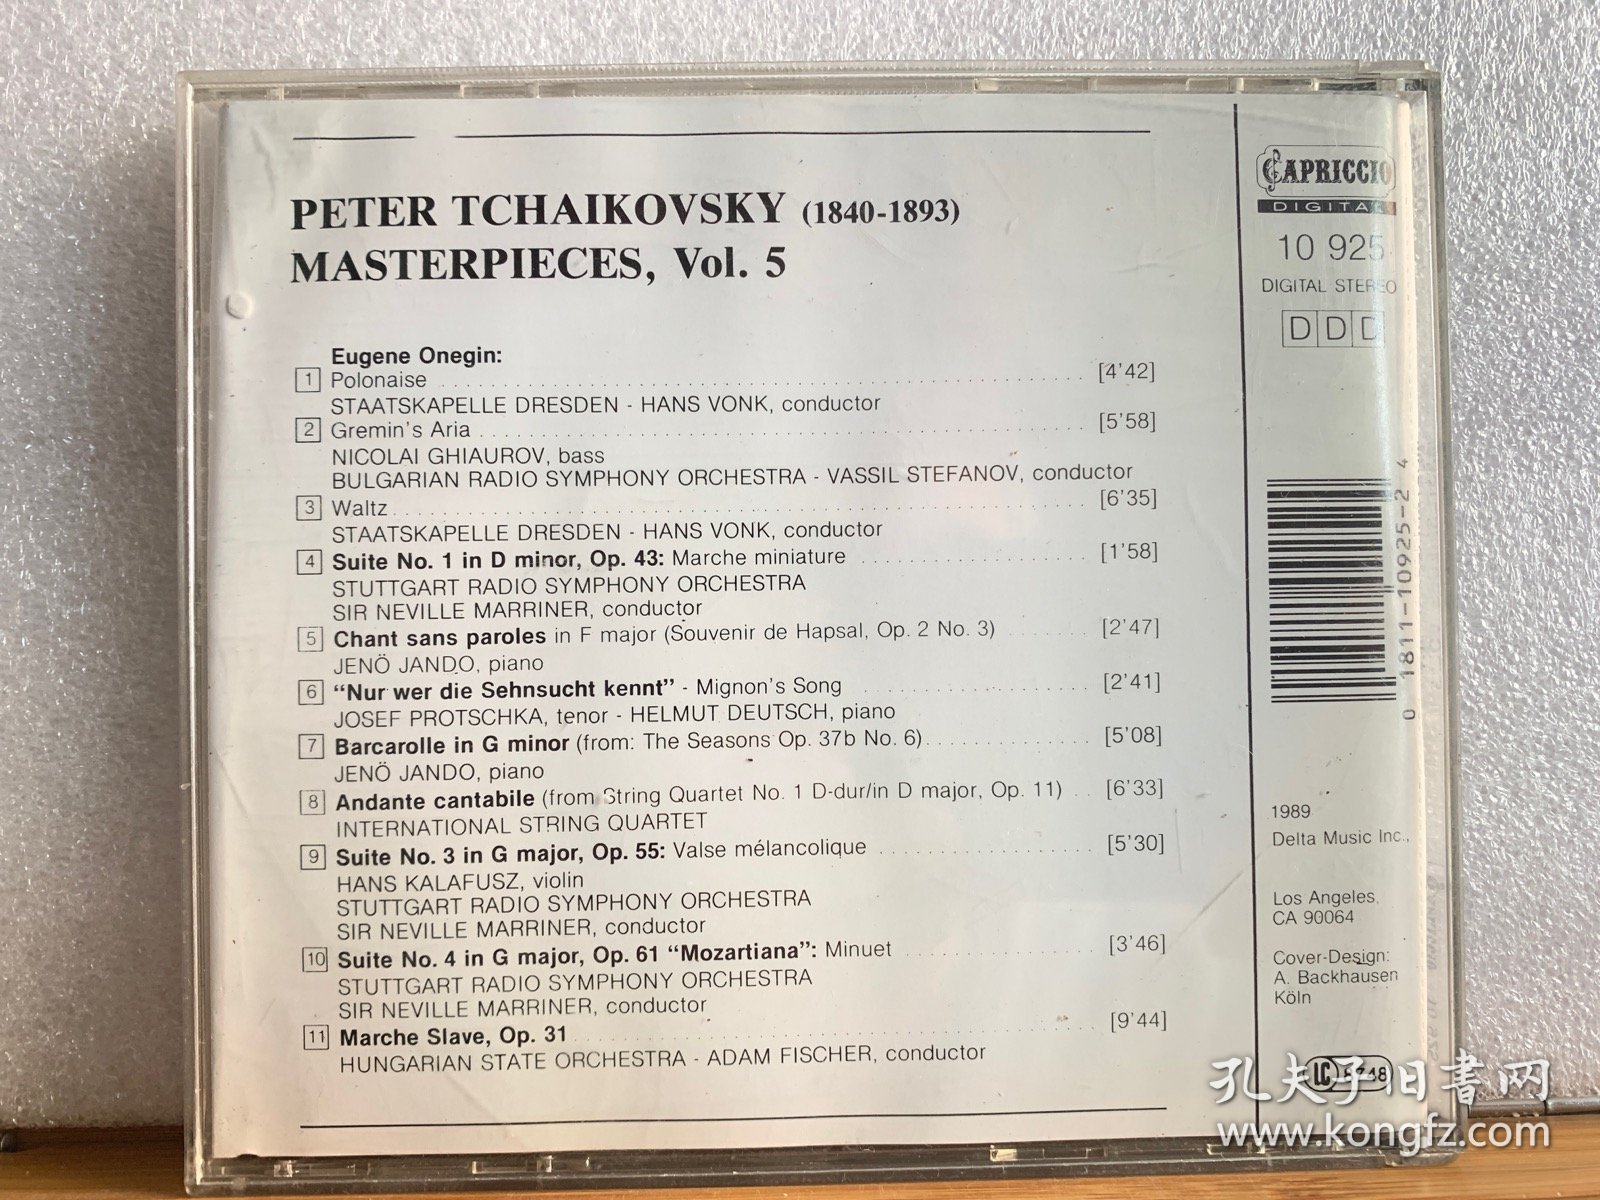 CD光盘 PETER TCHAIKOVSKY MASTERPIECES，Vol 5/Eugene Onegin/ARPICCIO DIGTAL 10 925 DDD/CD510